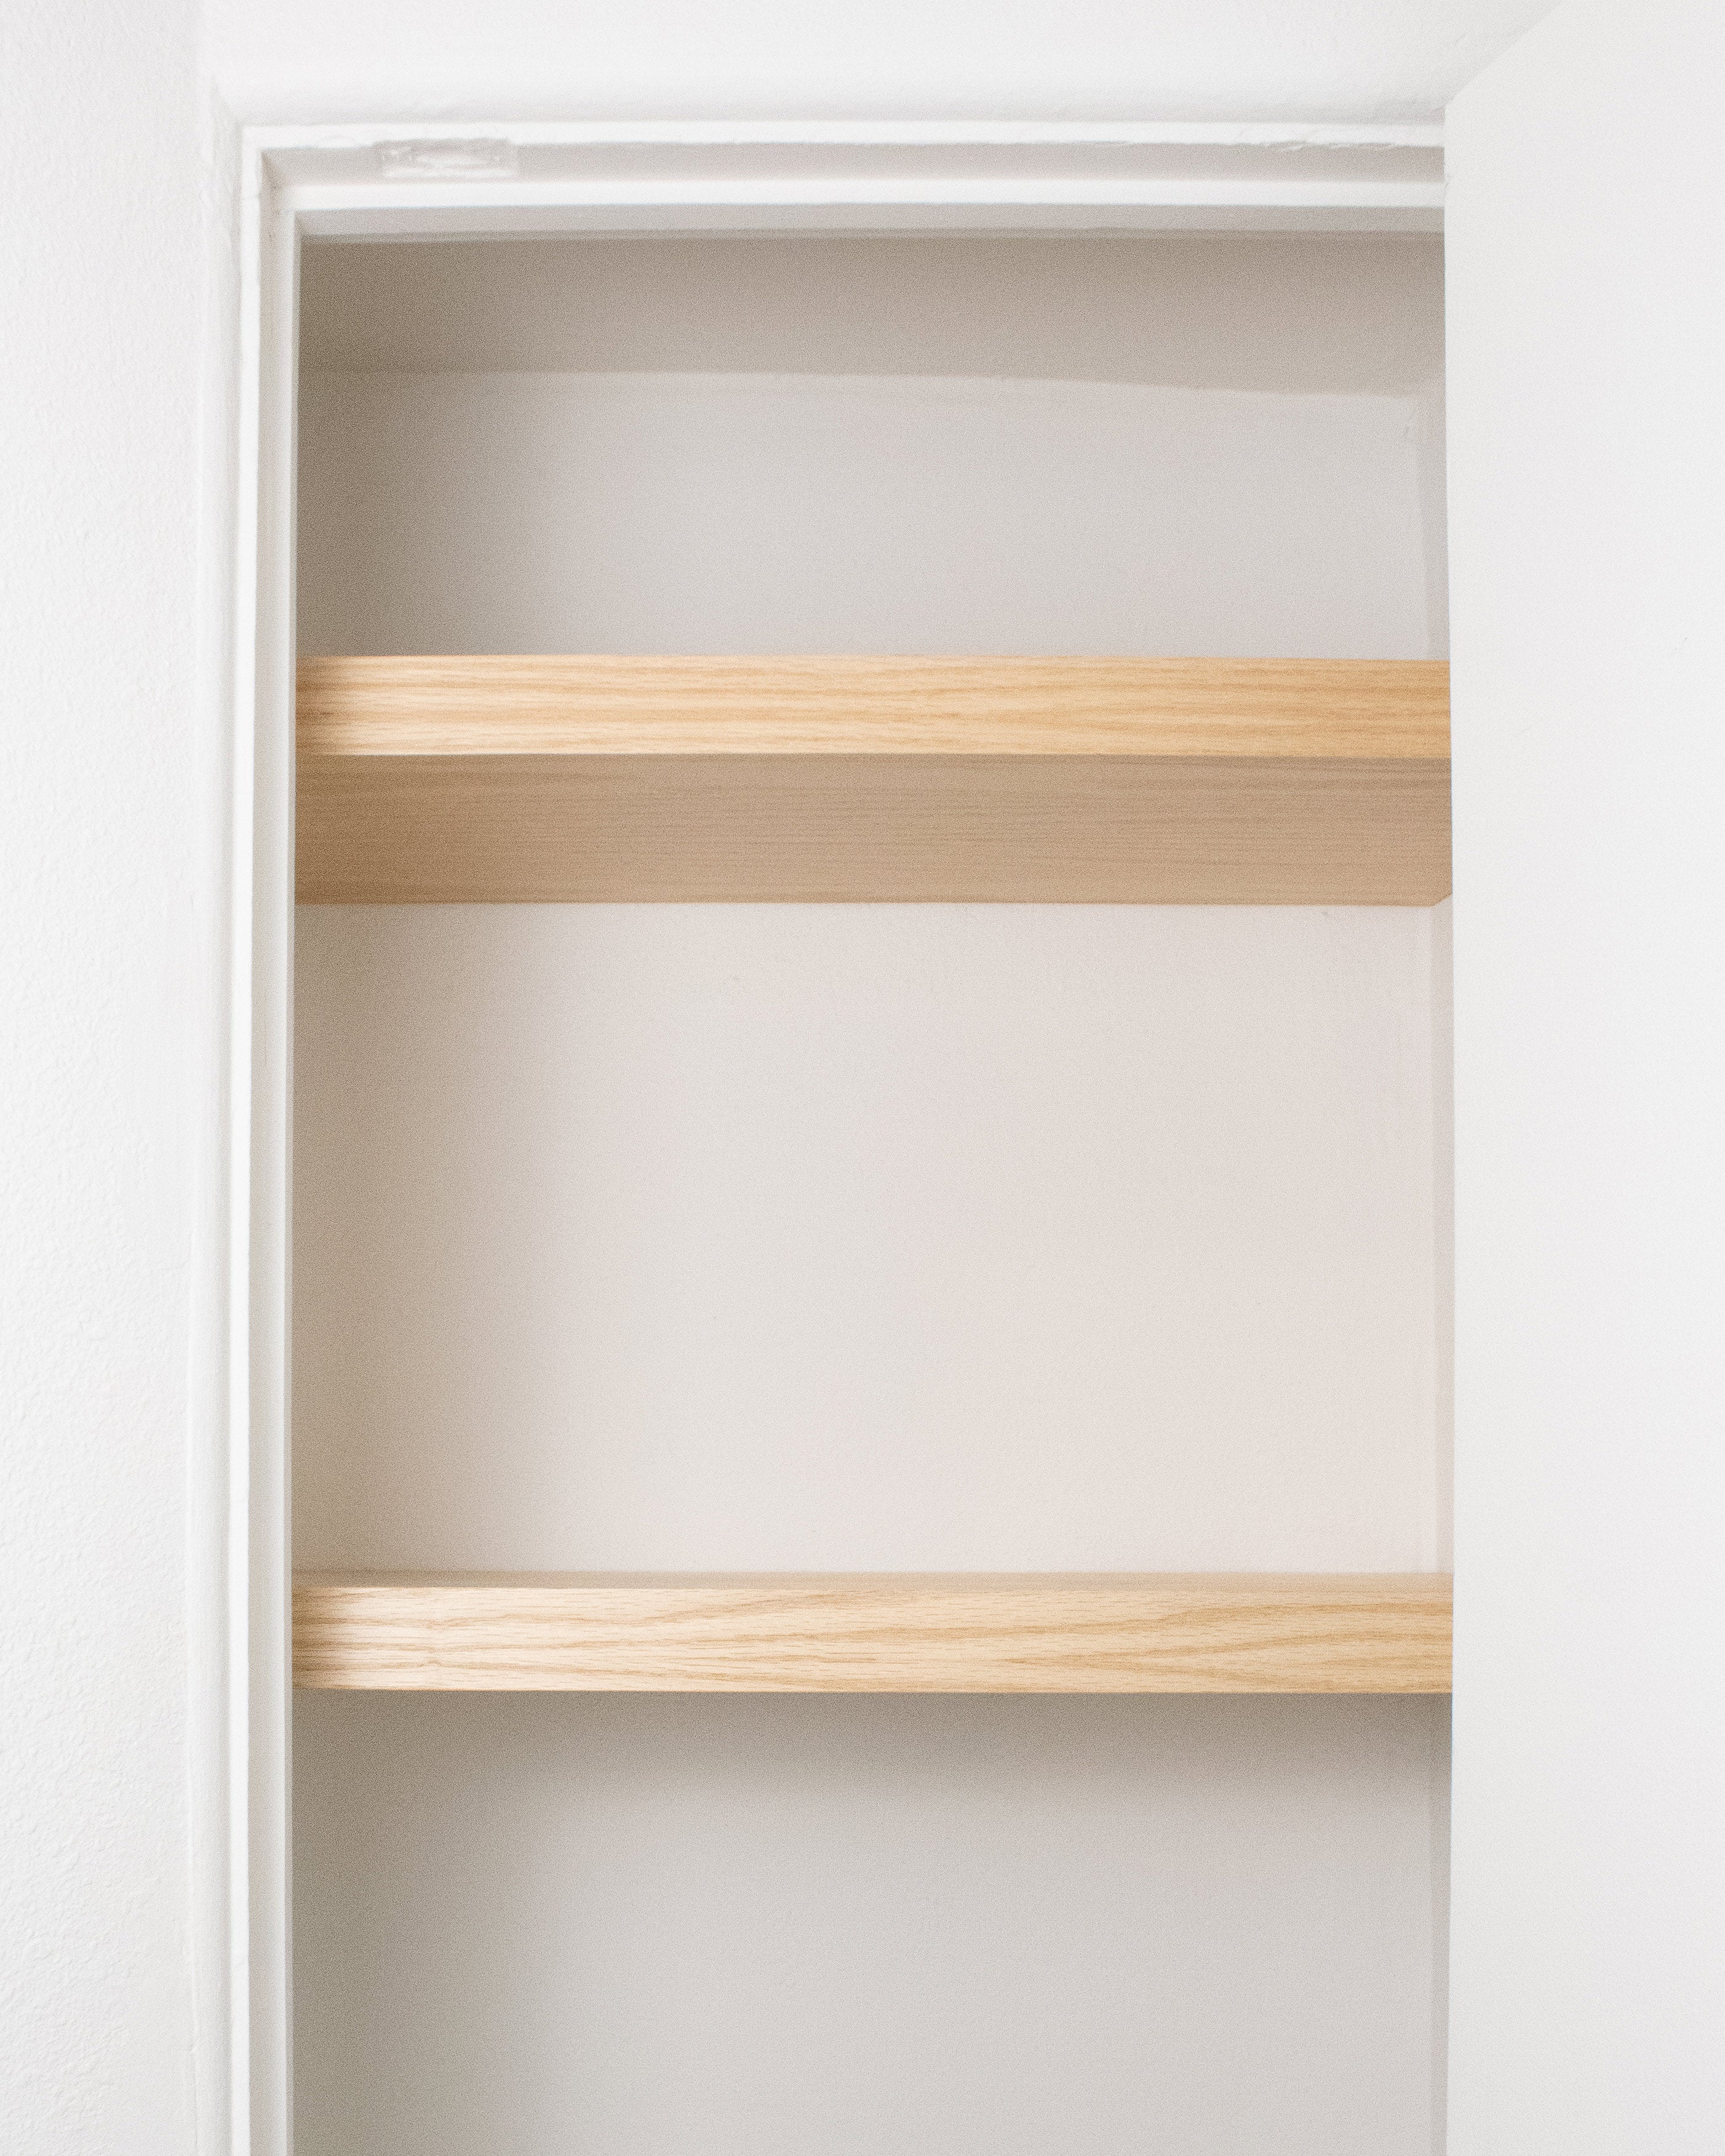 Teak 1.75" thick Cabinet Top / Slab Shelf